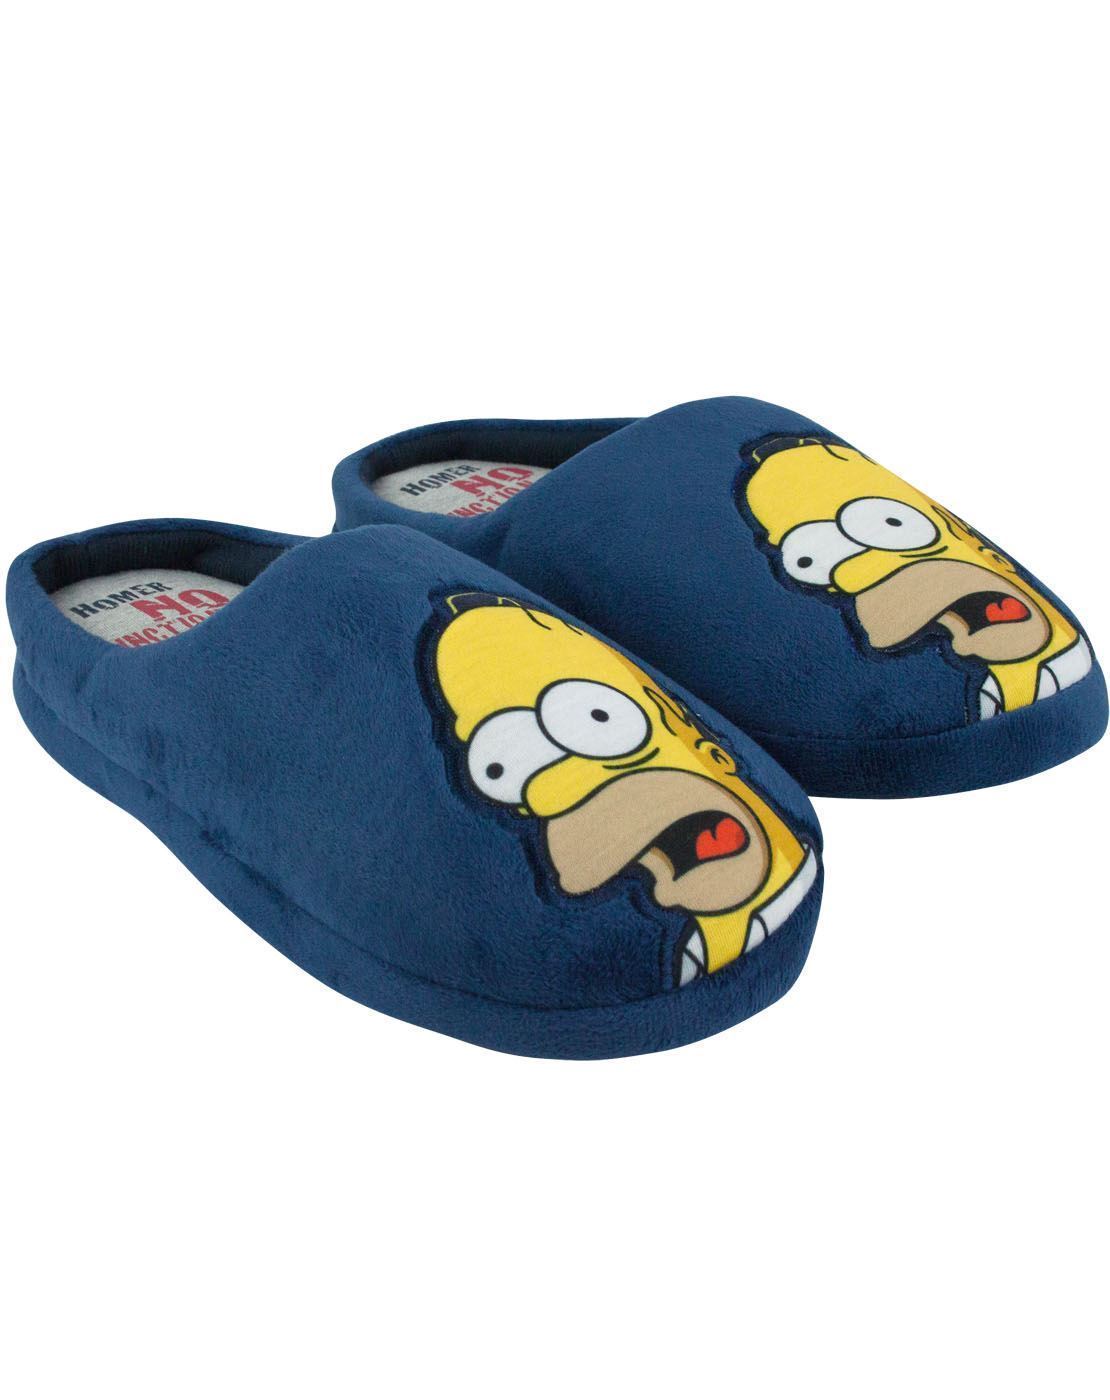 The Simpsons Slippers Shop | bellvalefarms.com